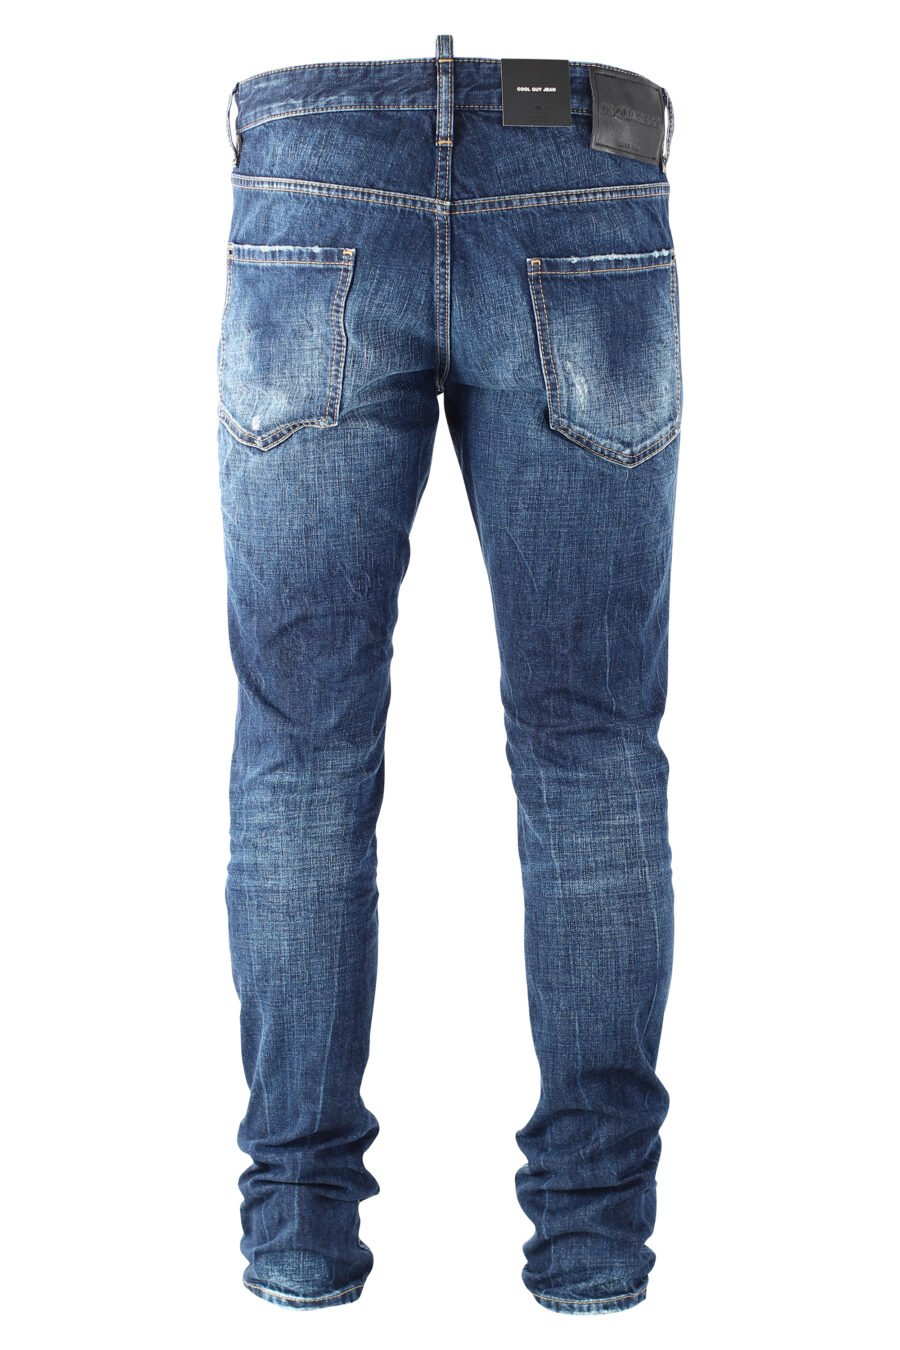 Jeans "cool guy jean" blau mit schwarzem "D2" Logo - IMG 9689